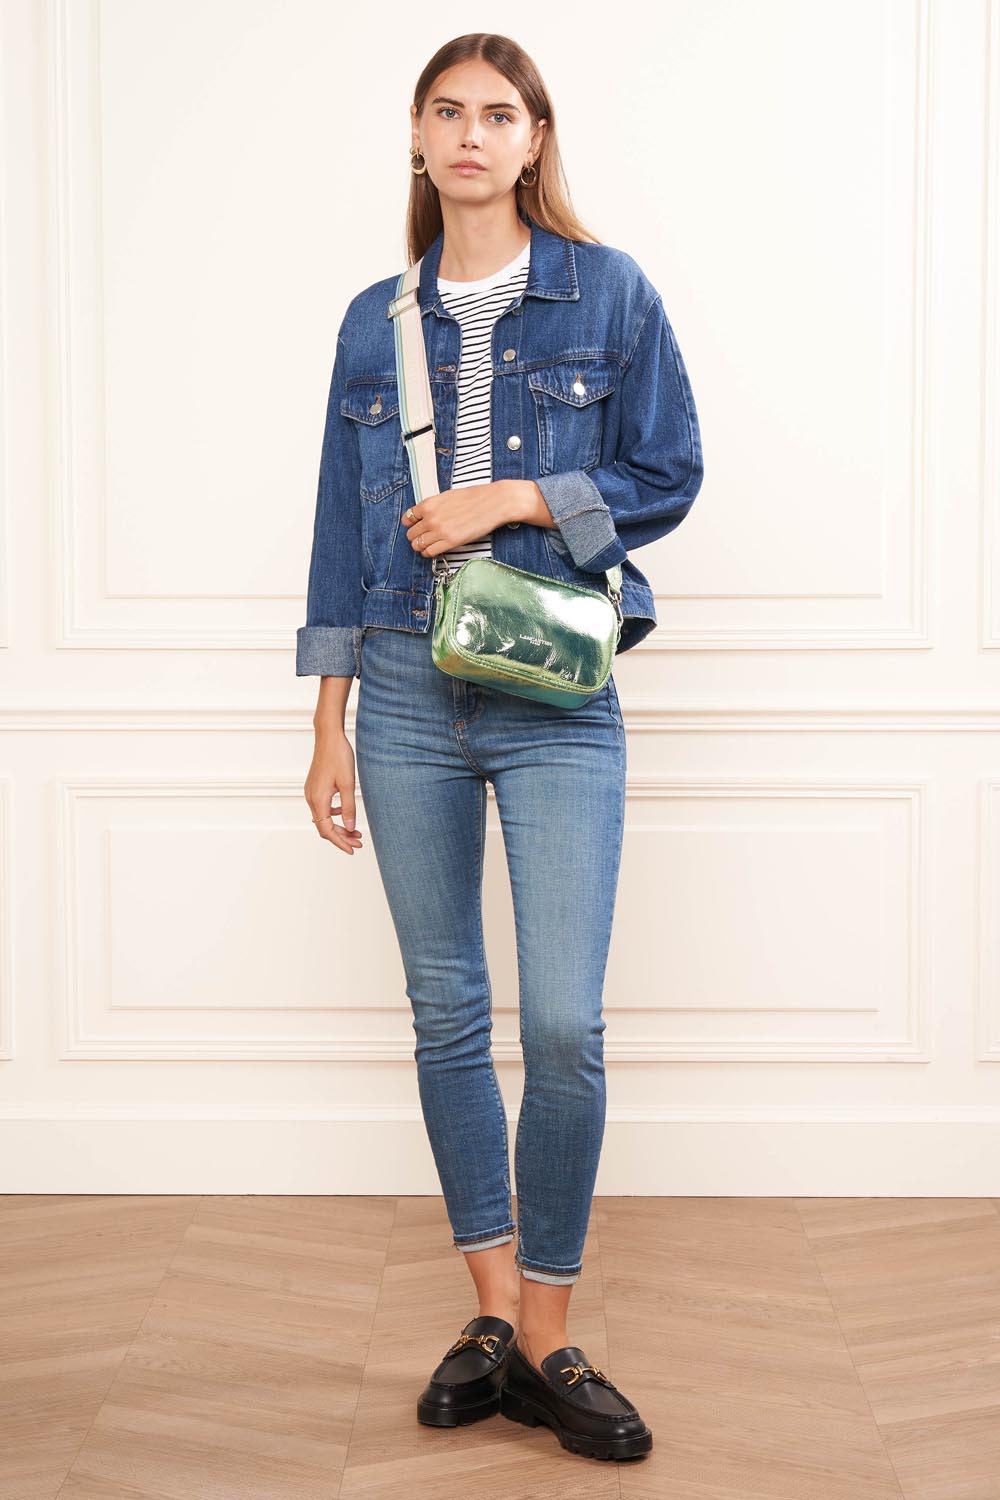 sac trotteur - fashion fIrenze #couleur_vert-iris